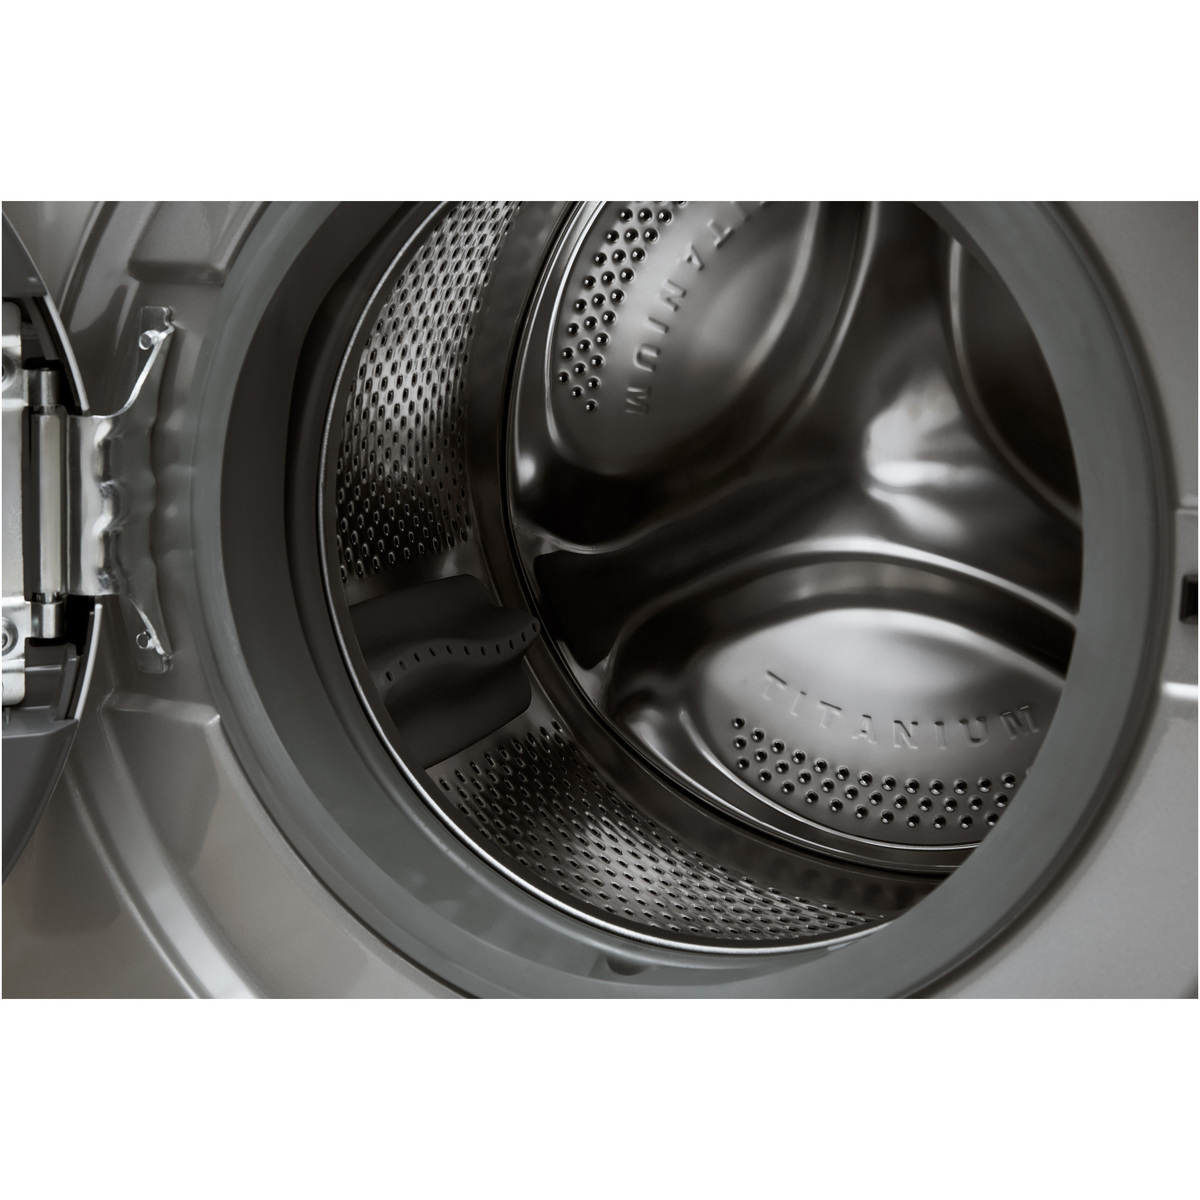 Whirlpool Freestanding Washer Dryer, 9 kg, 1400 rpm, Silver, FWDG96148SBS